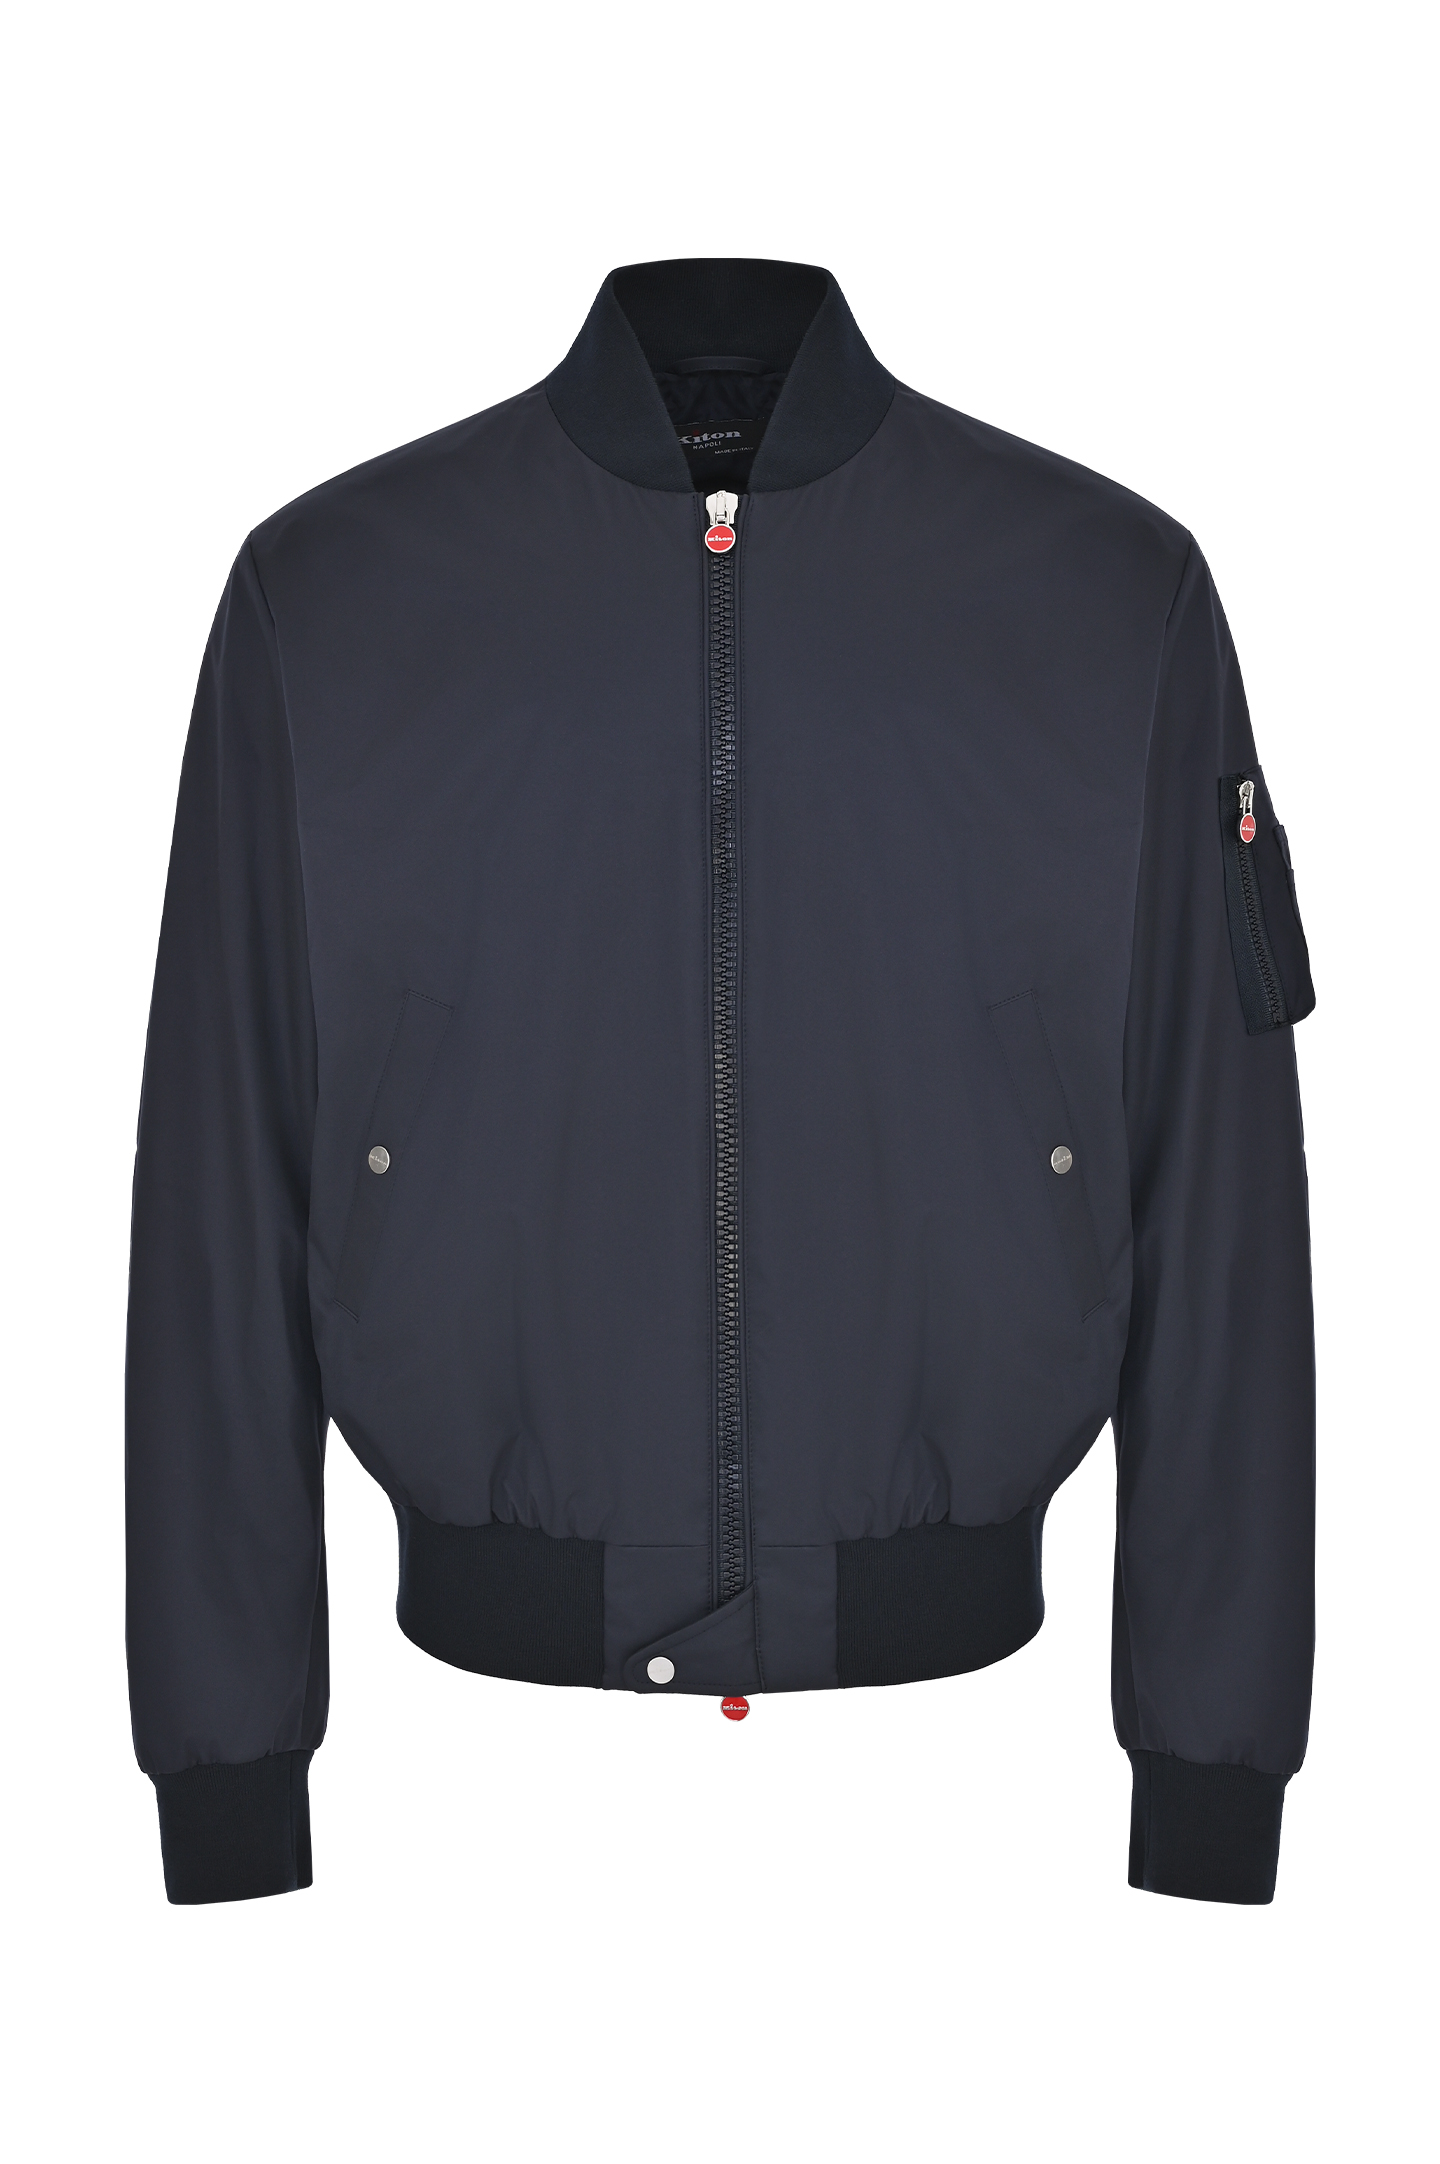 Куртка-бомбер из полиэстера с карманами KITON UW1781V0835C0, цвет: Темно-синий, Мужской